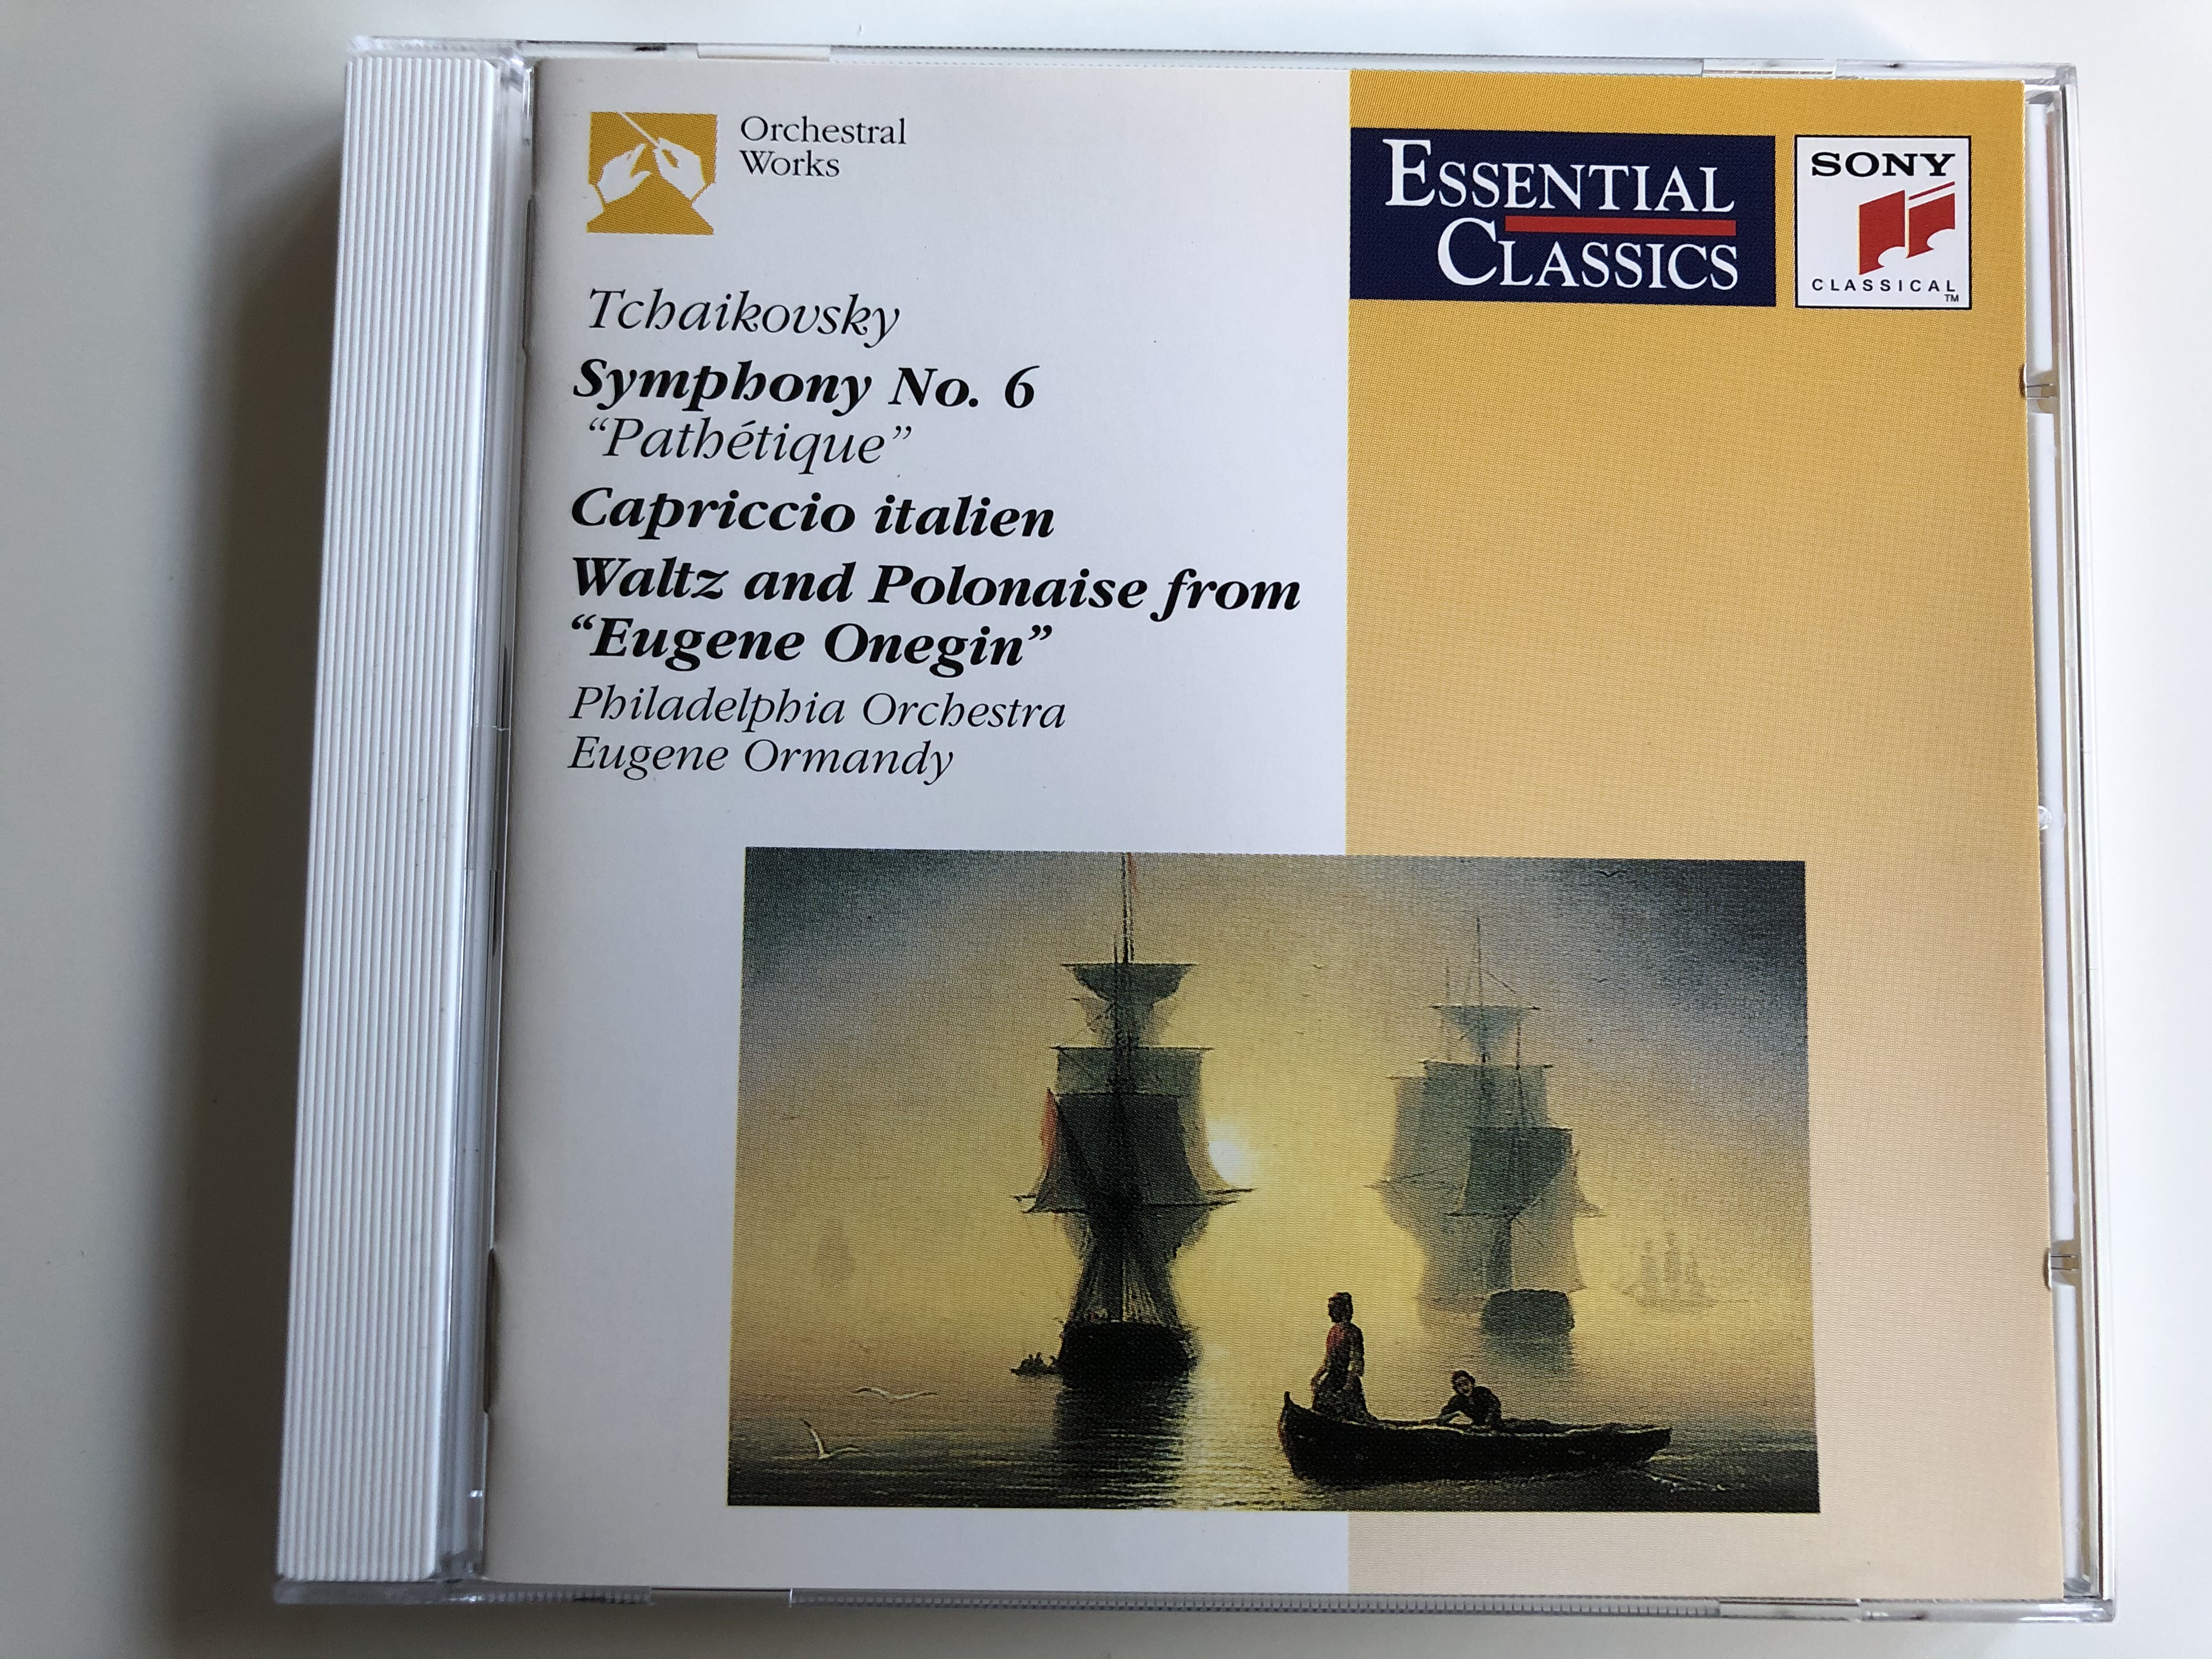 tchaikovsky-symphony-no.-6-path-tique-capriccio-italien-waltz-and-polonaise-from-eugene-onegin-philadelphia-orchestra-eugene-ormandy-sony-classical-audio-cd-sbk-47657-1-.jpg